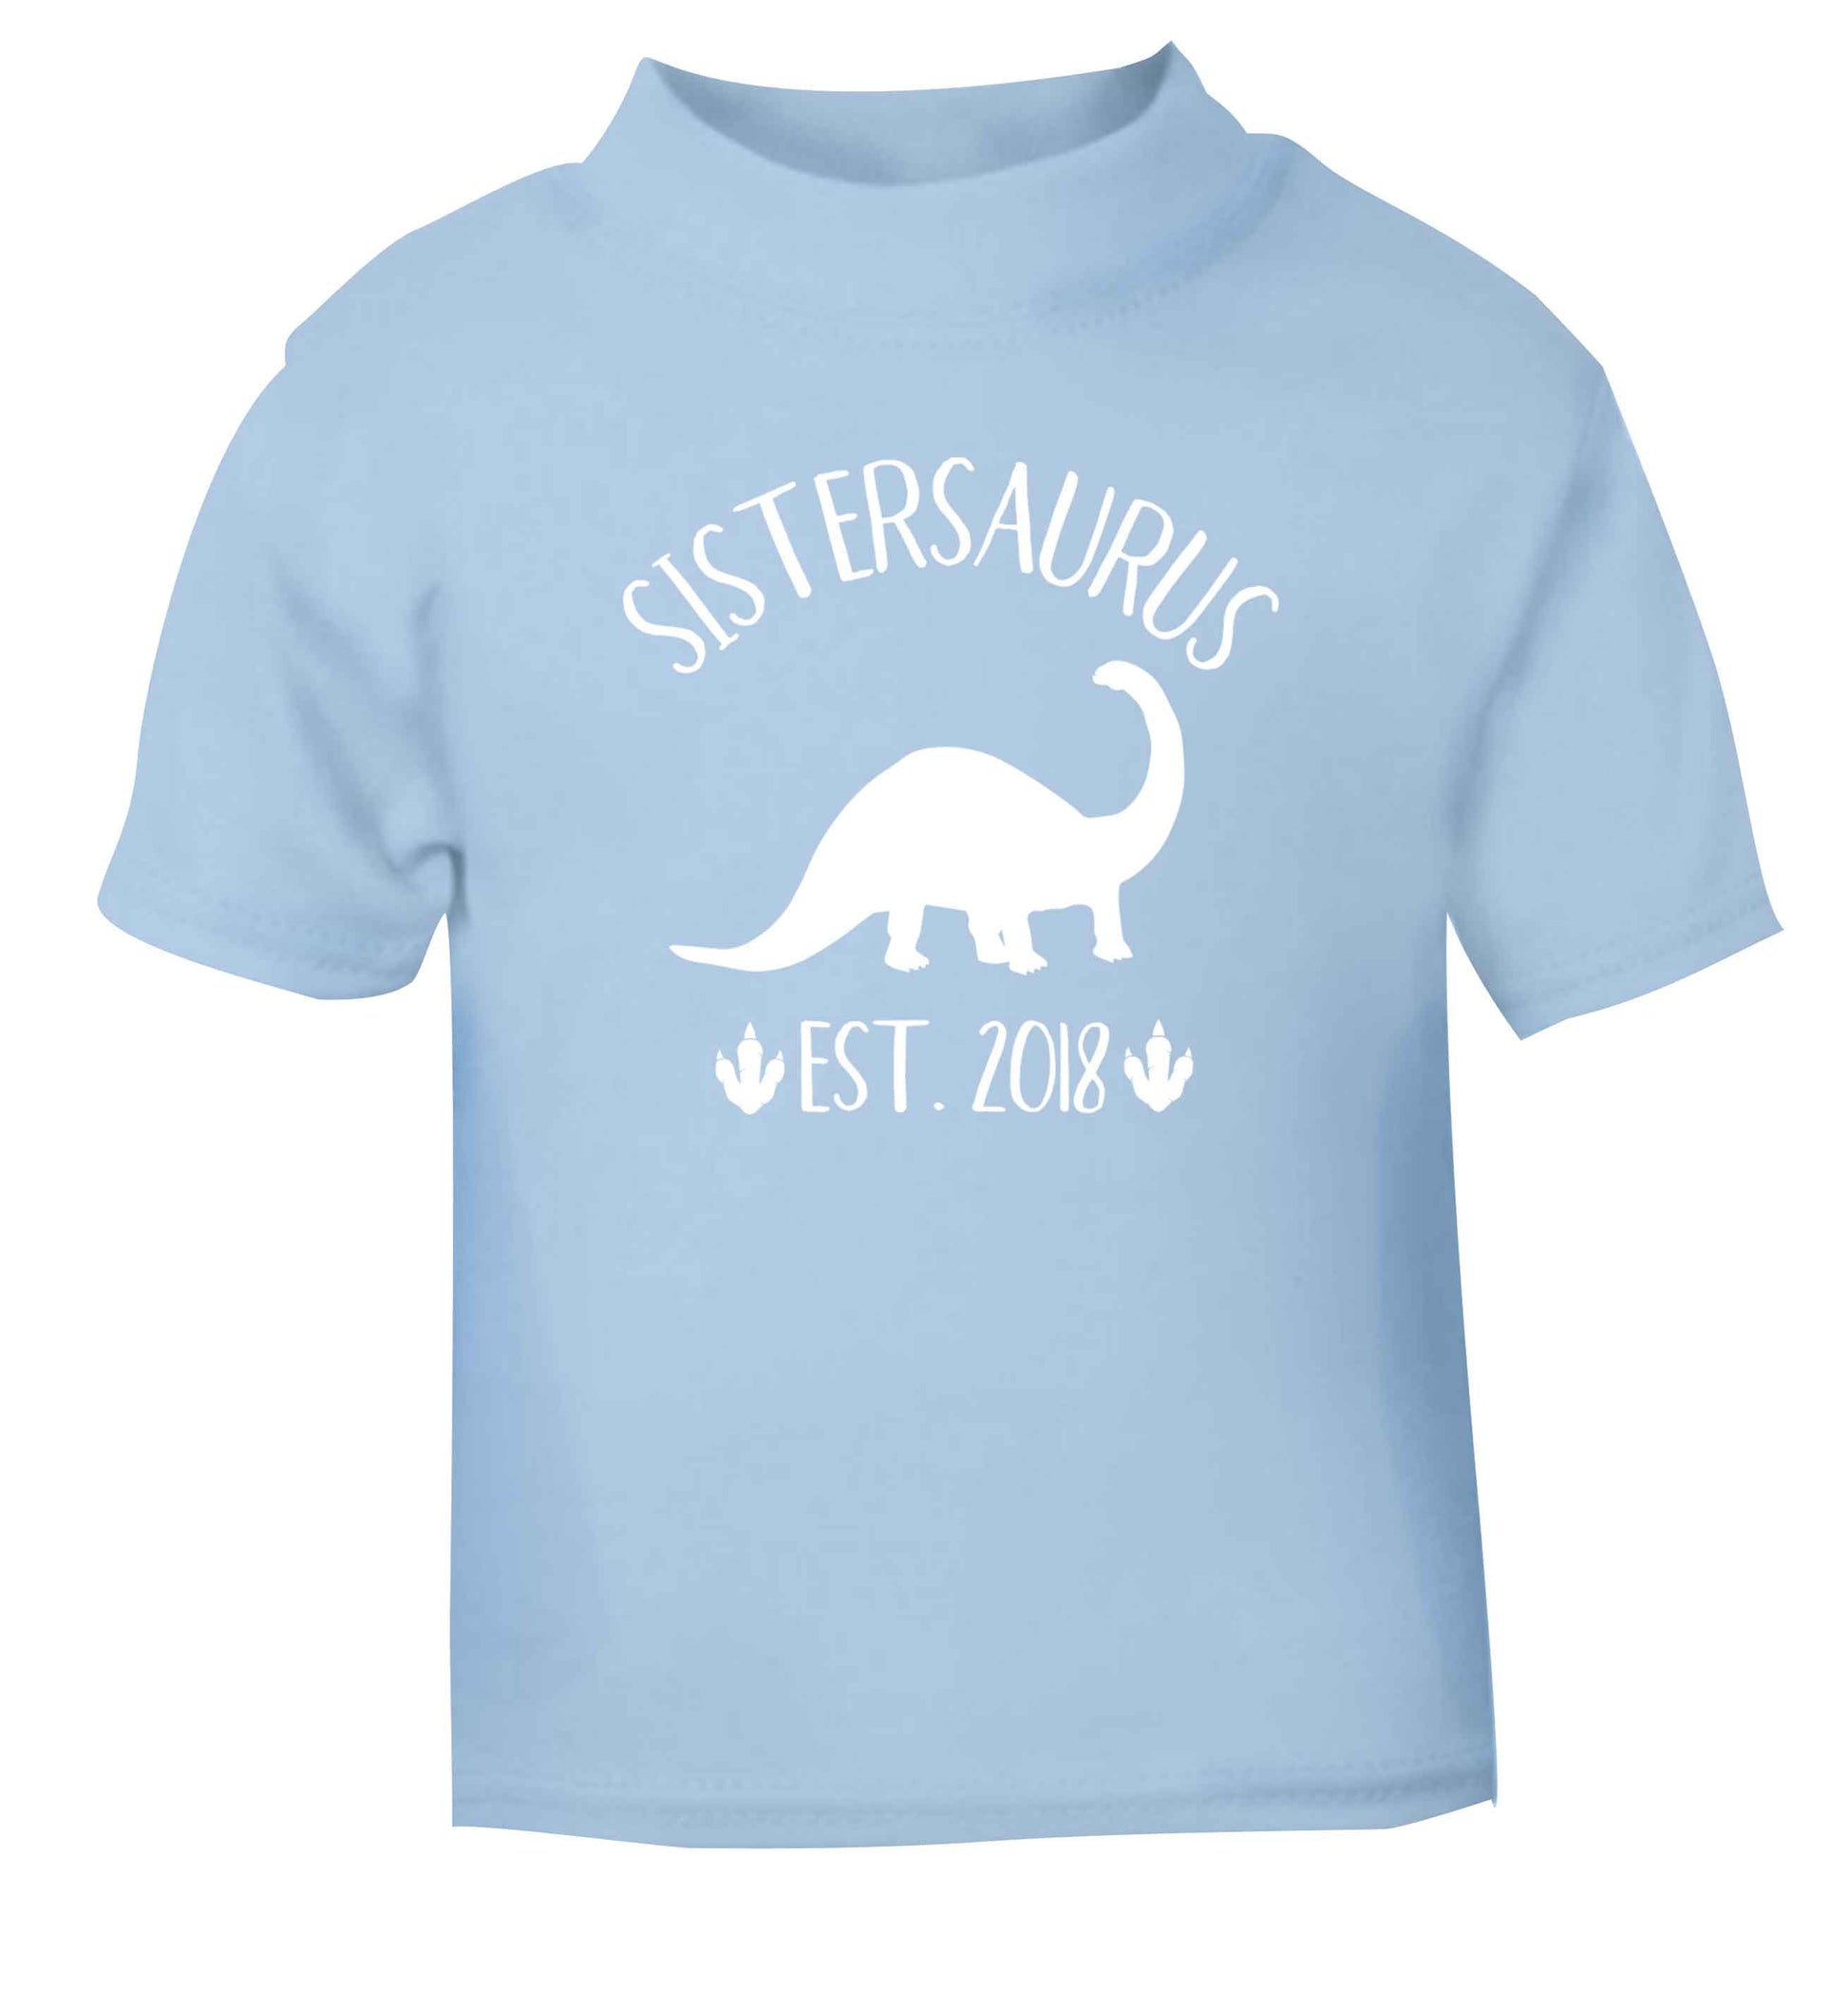 Personalised sistersaurus since (custom date) light blue Baby Toddler Tshirt 2 Years